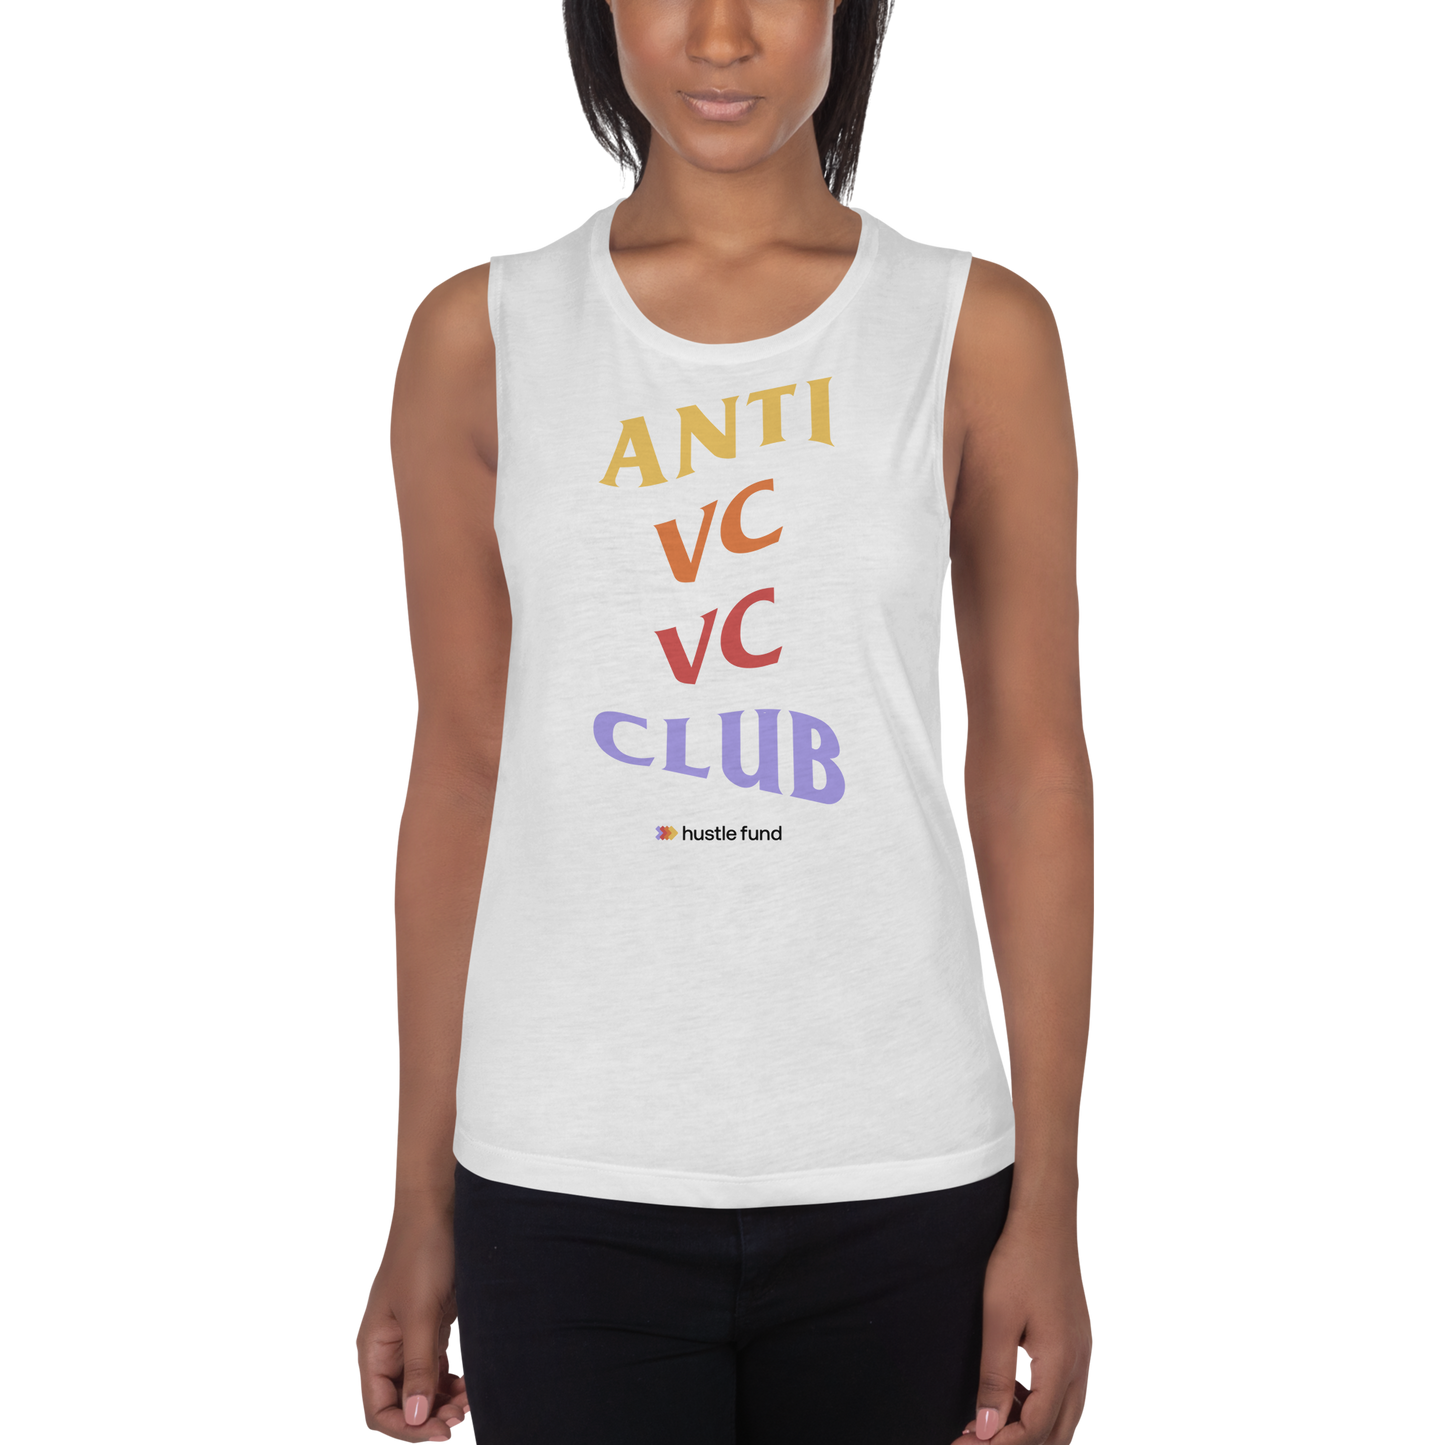 Anti VC VC Club Ladies’ Muscle Tank